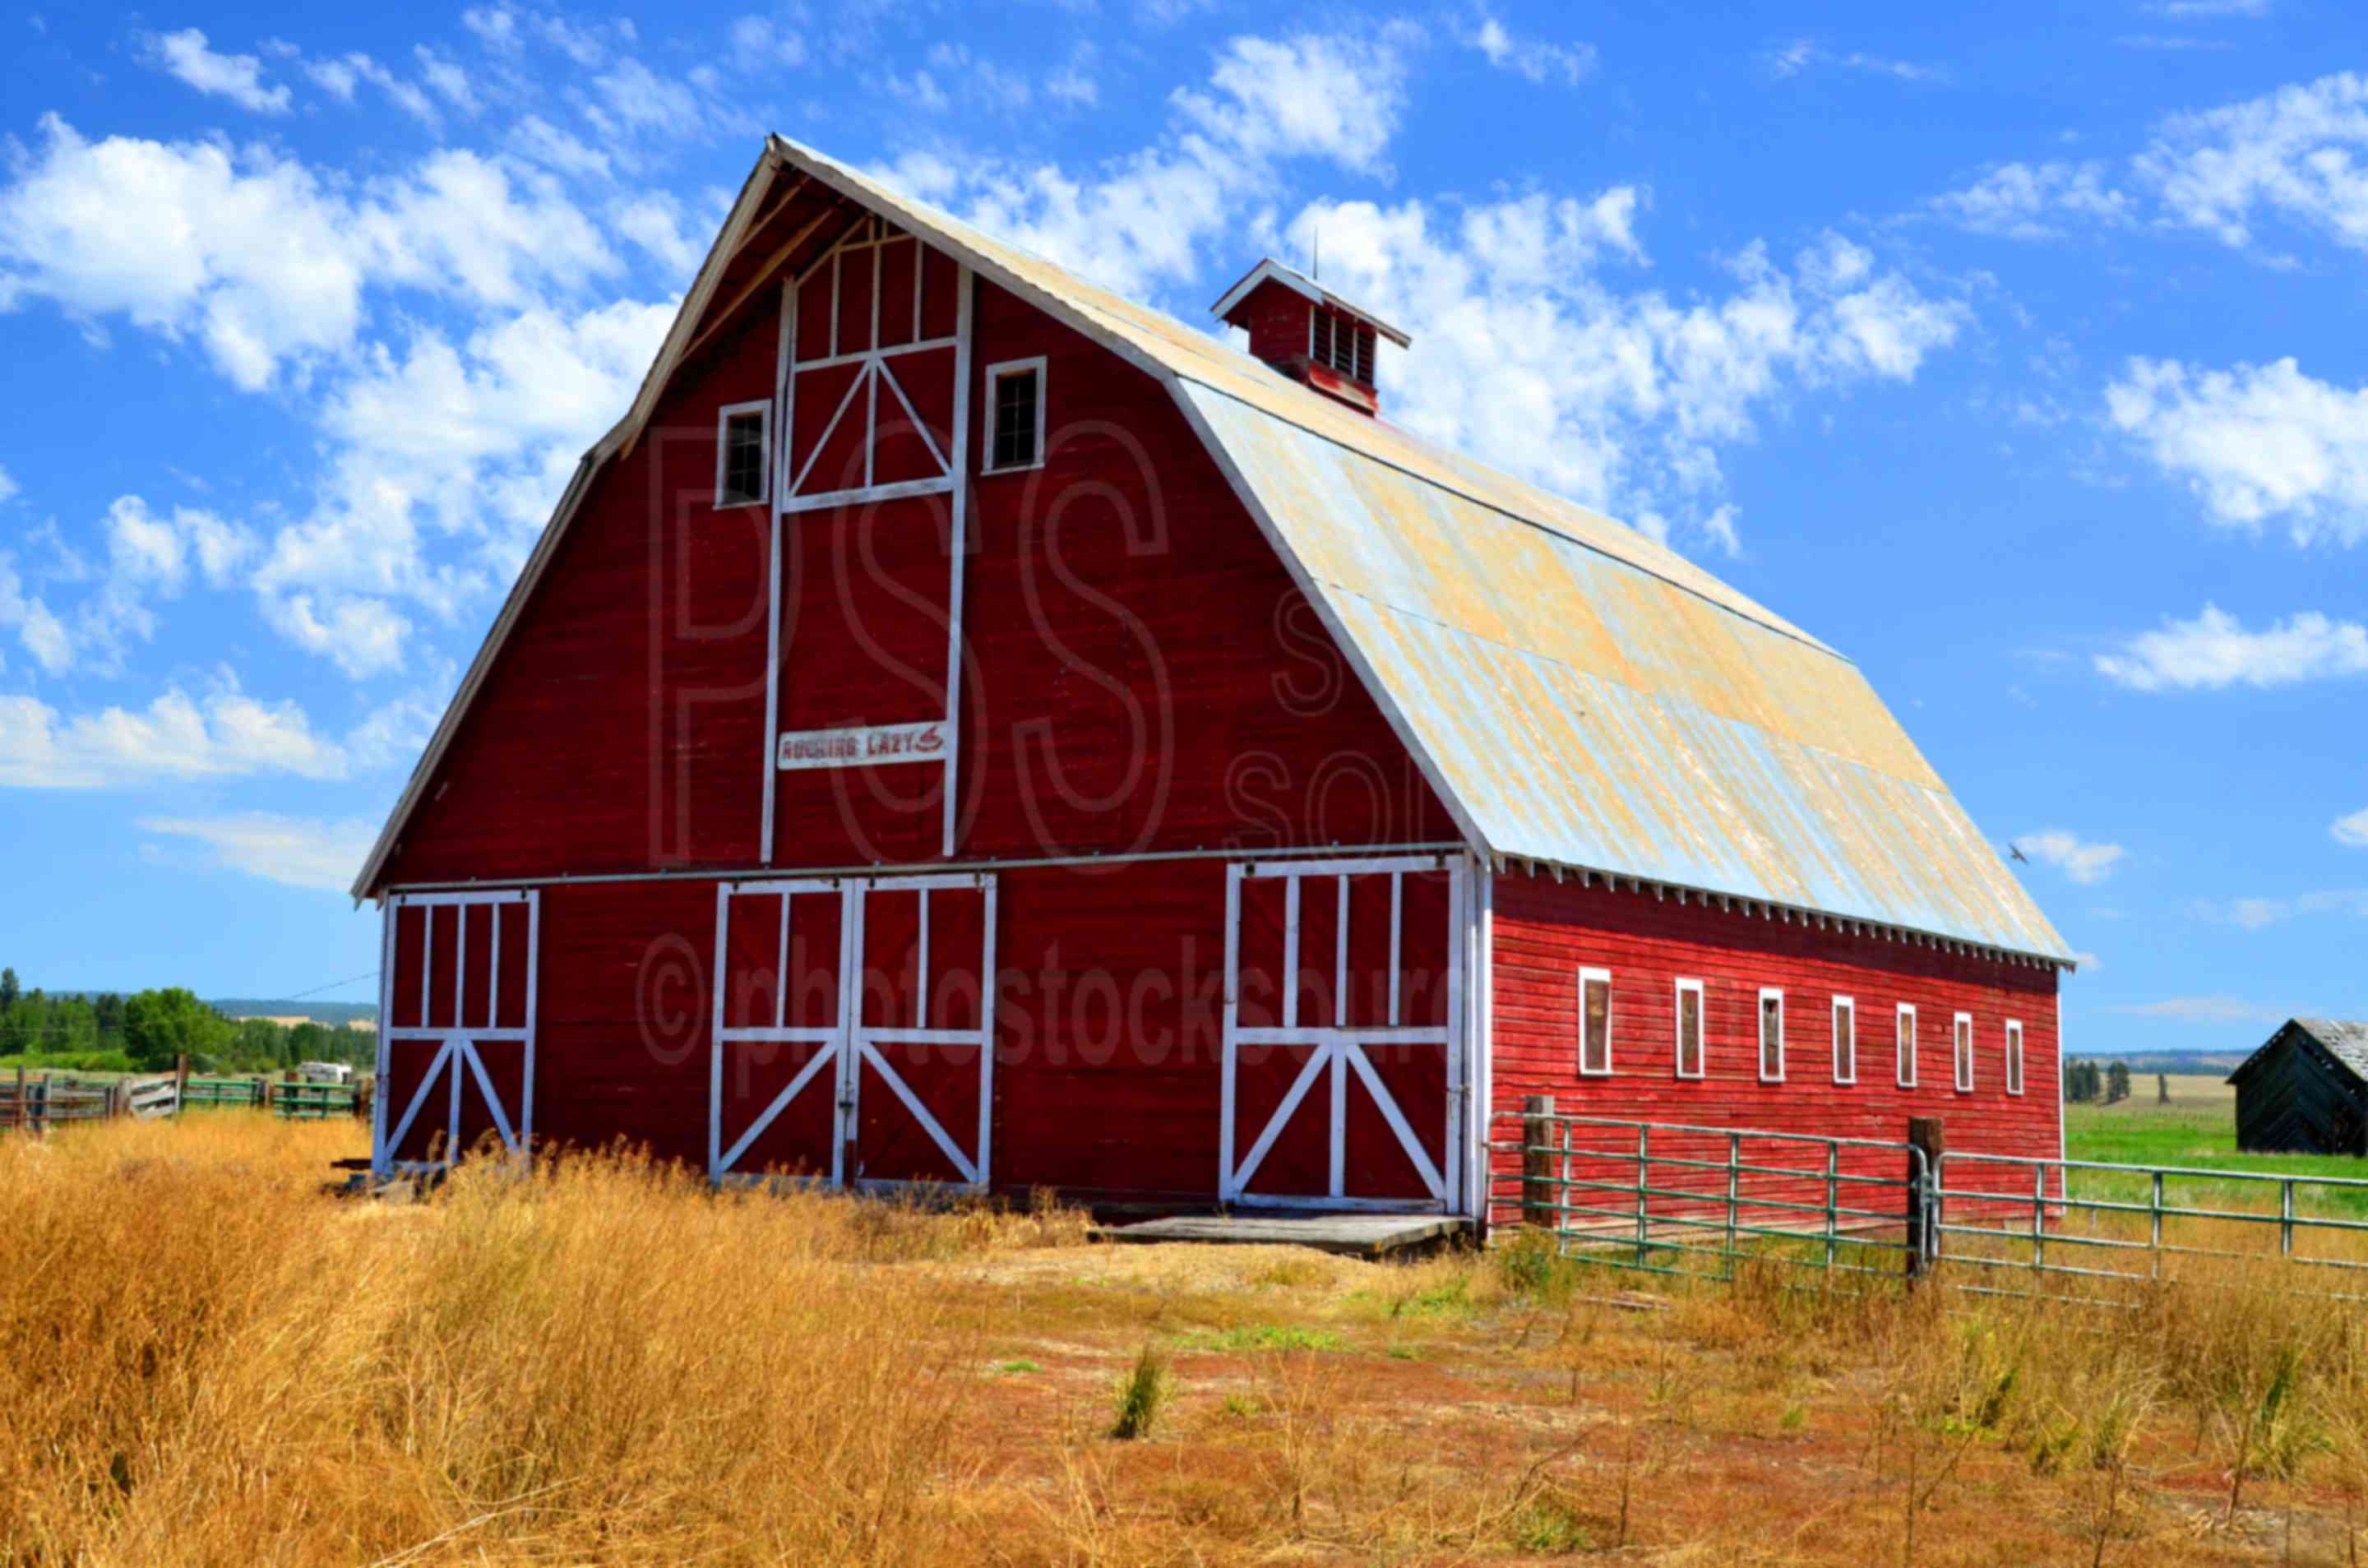 Ukiah Red Barn,barn,red,fence,rural